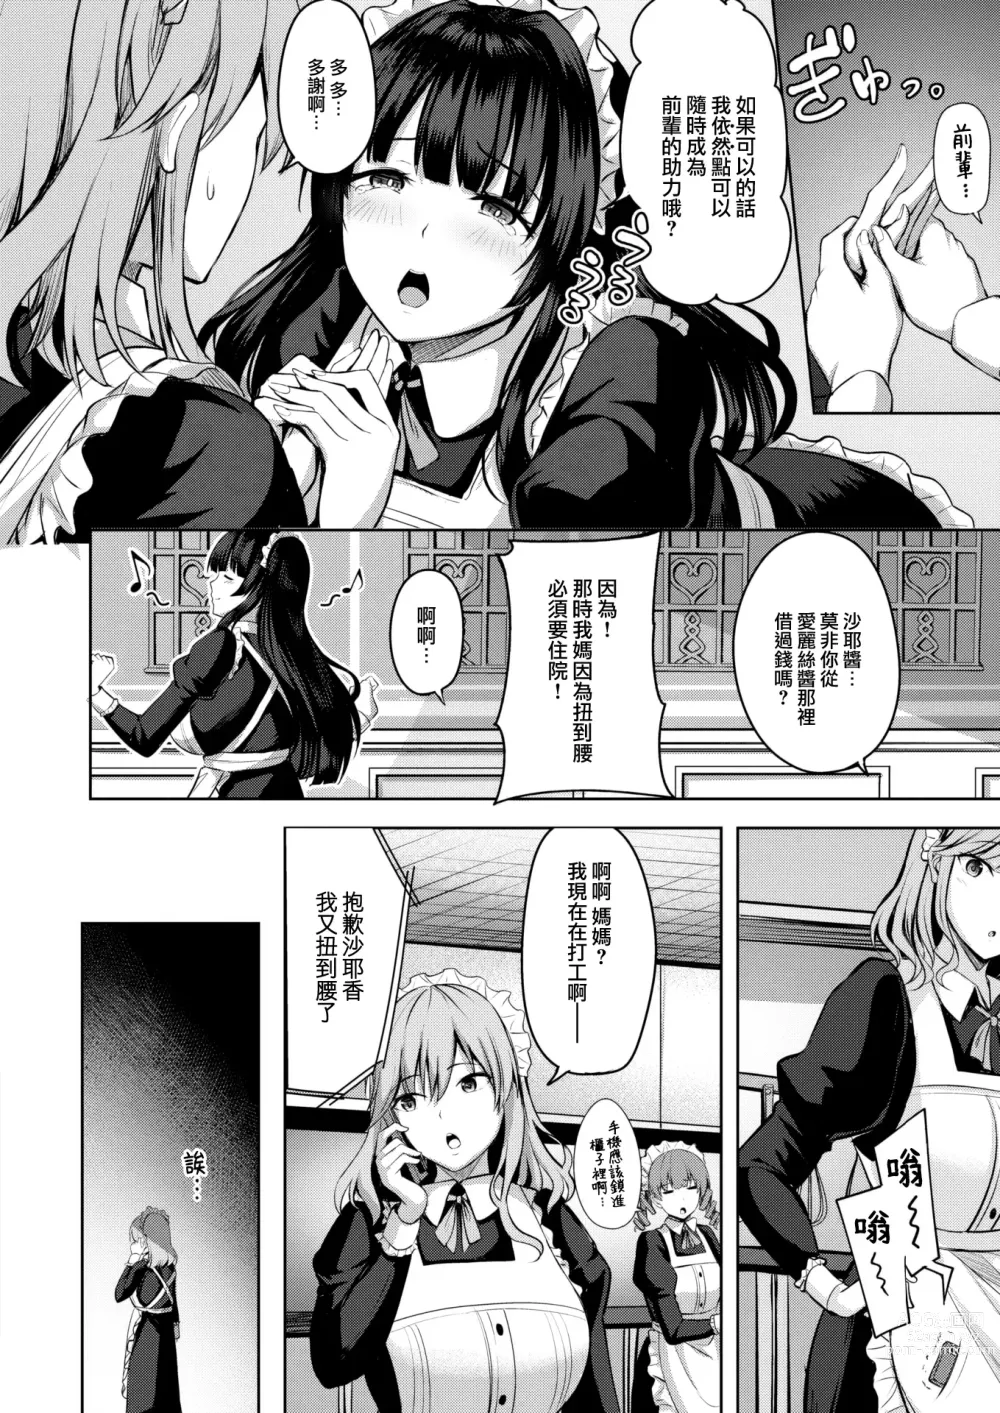 Page 3 of manga Maid@Main